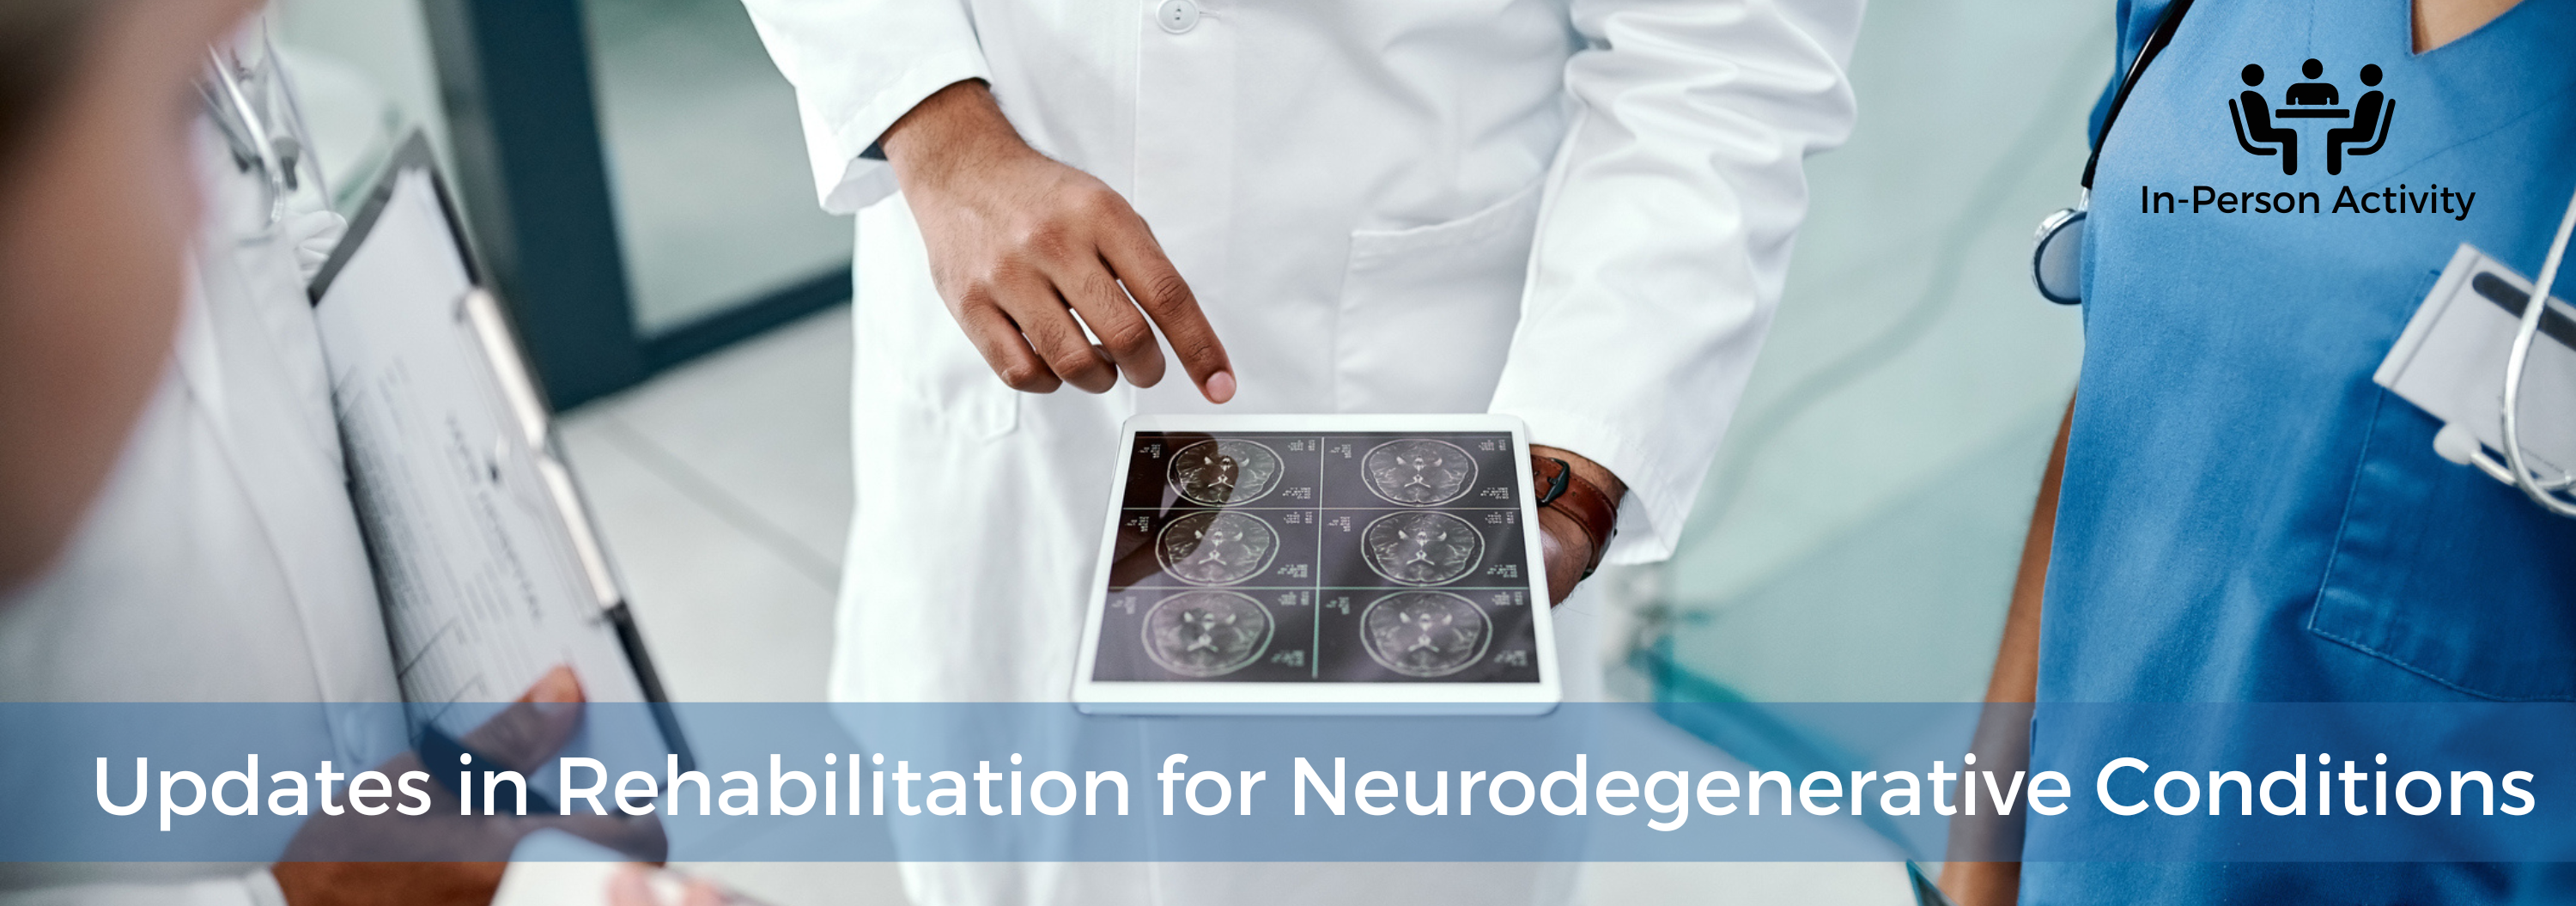 Updates in Rehabilitation for Neurodegenerative Conditions Banner